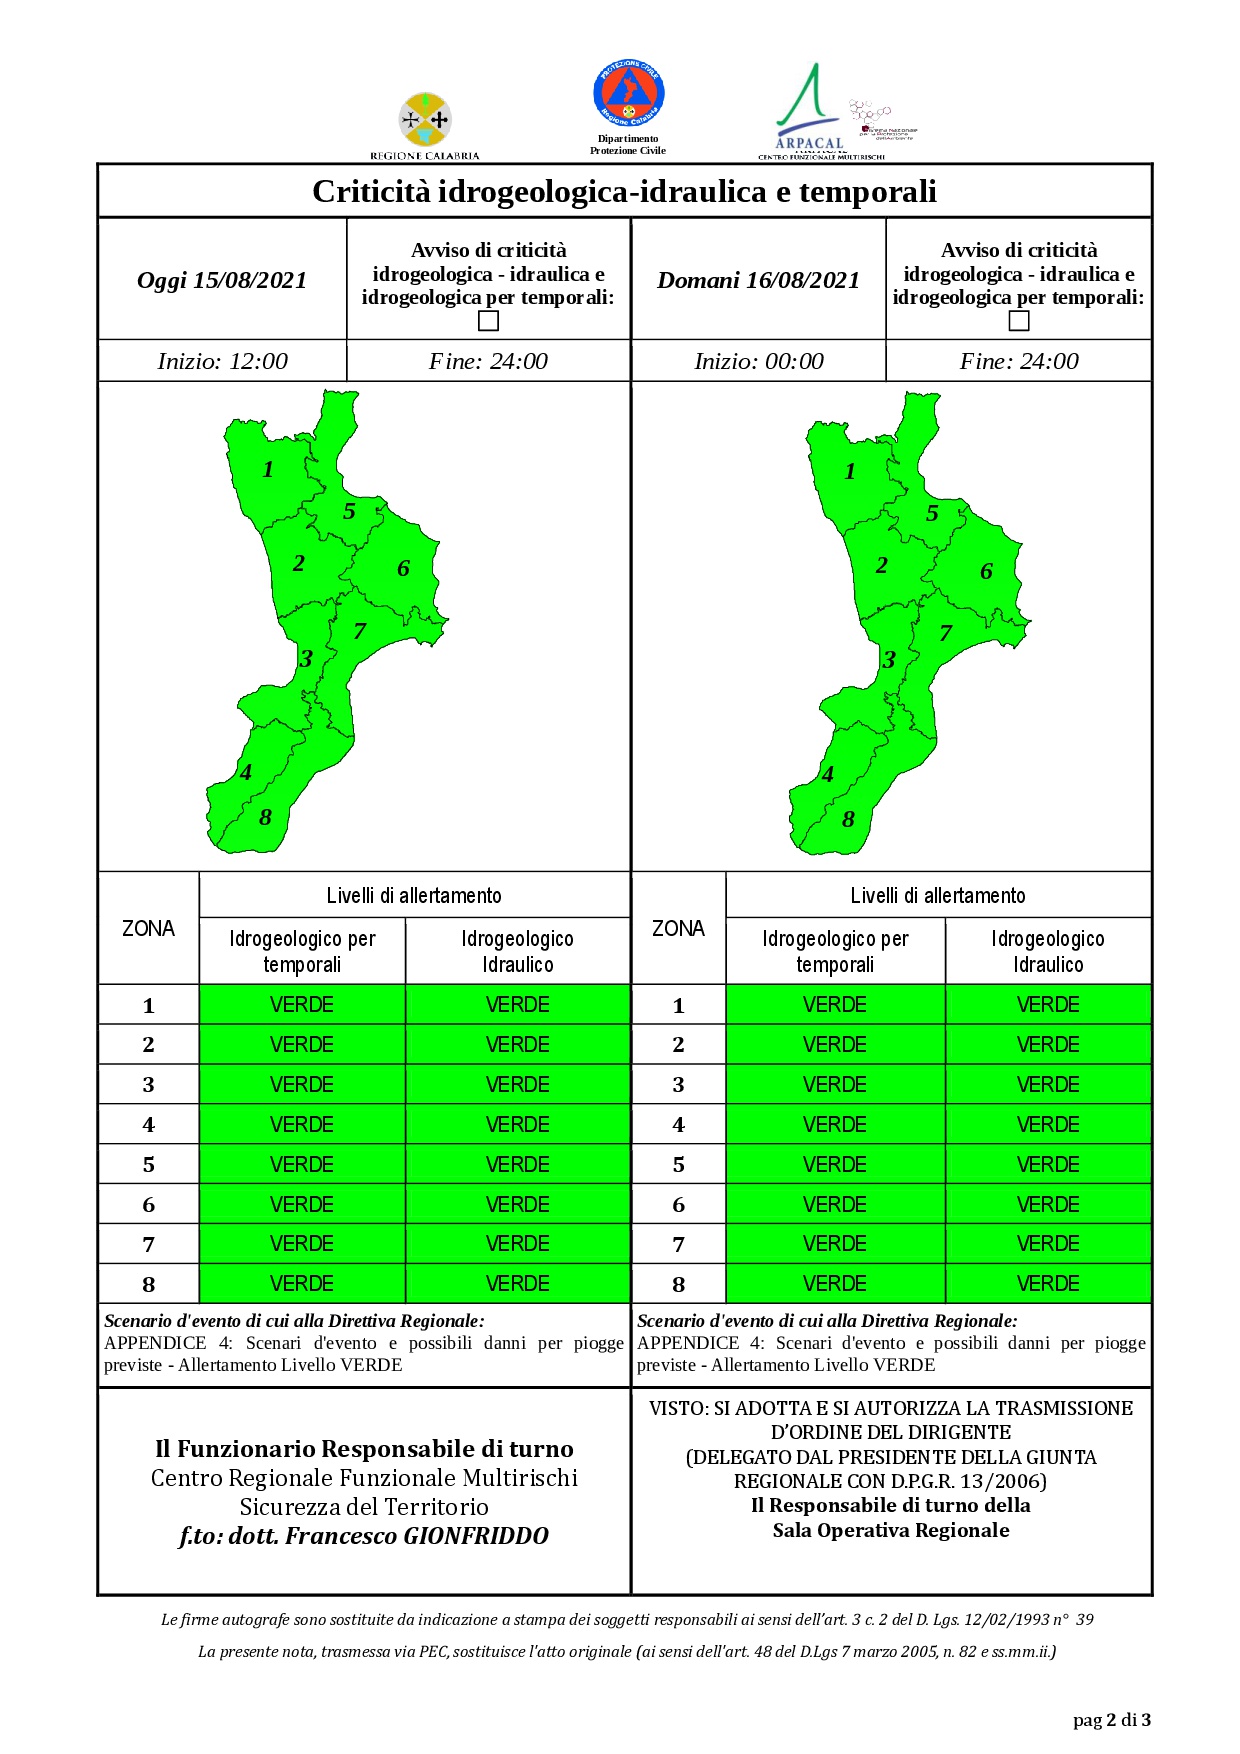 Criticità idrogeologica-idraulica e temporali in Calabria 15-08-2021